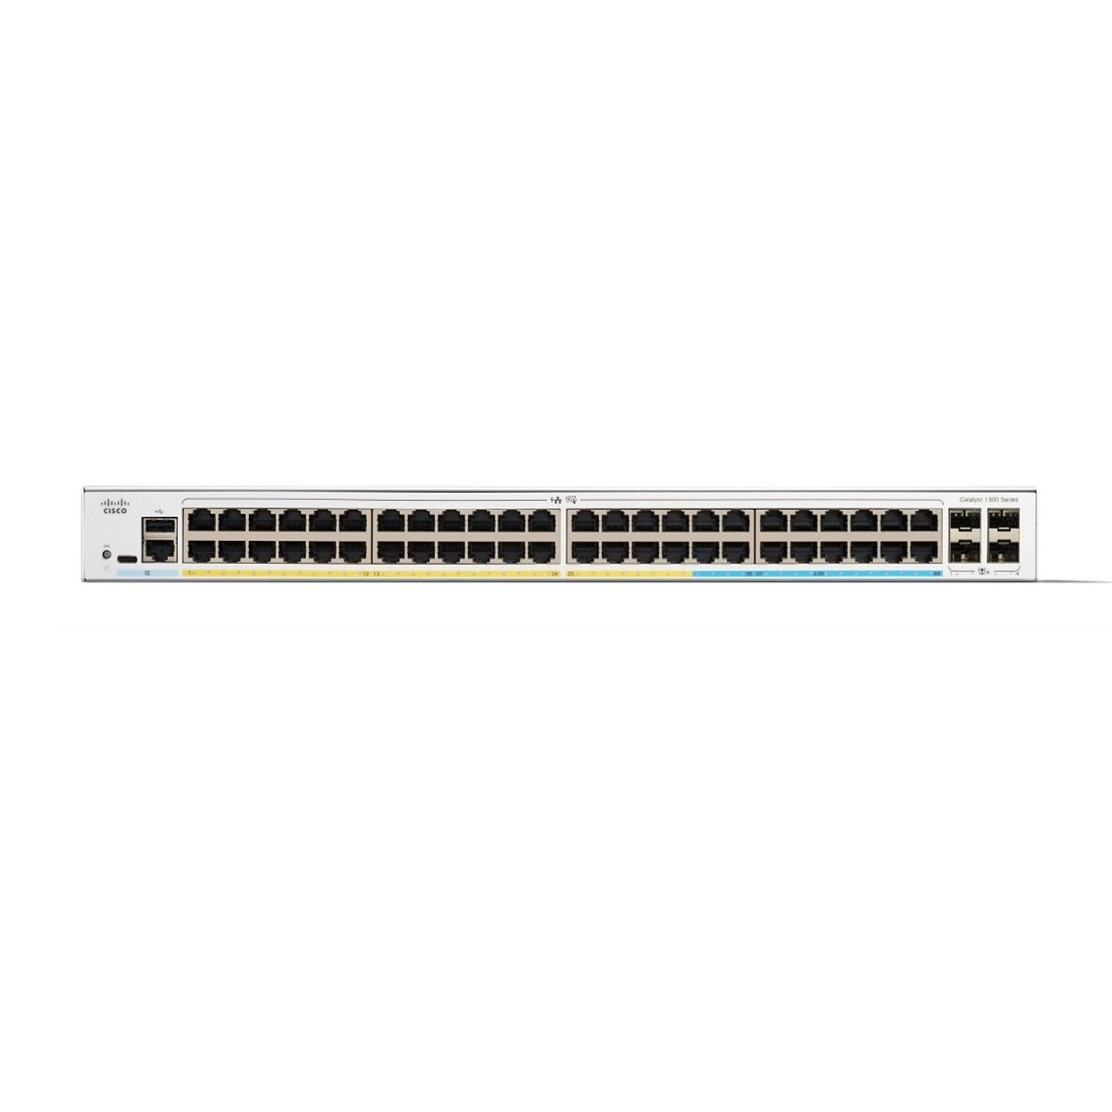 Cisco catalyst C1300-48P, 48 ports gigabit POE+ 370W + 4 x 10G SFP uplink ports switch